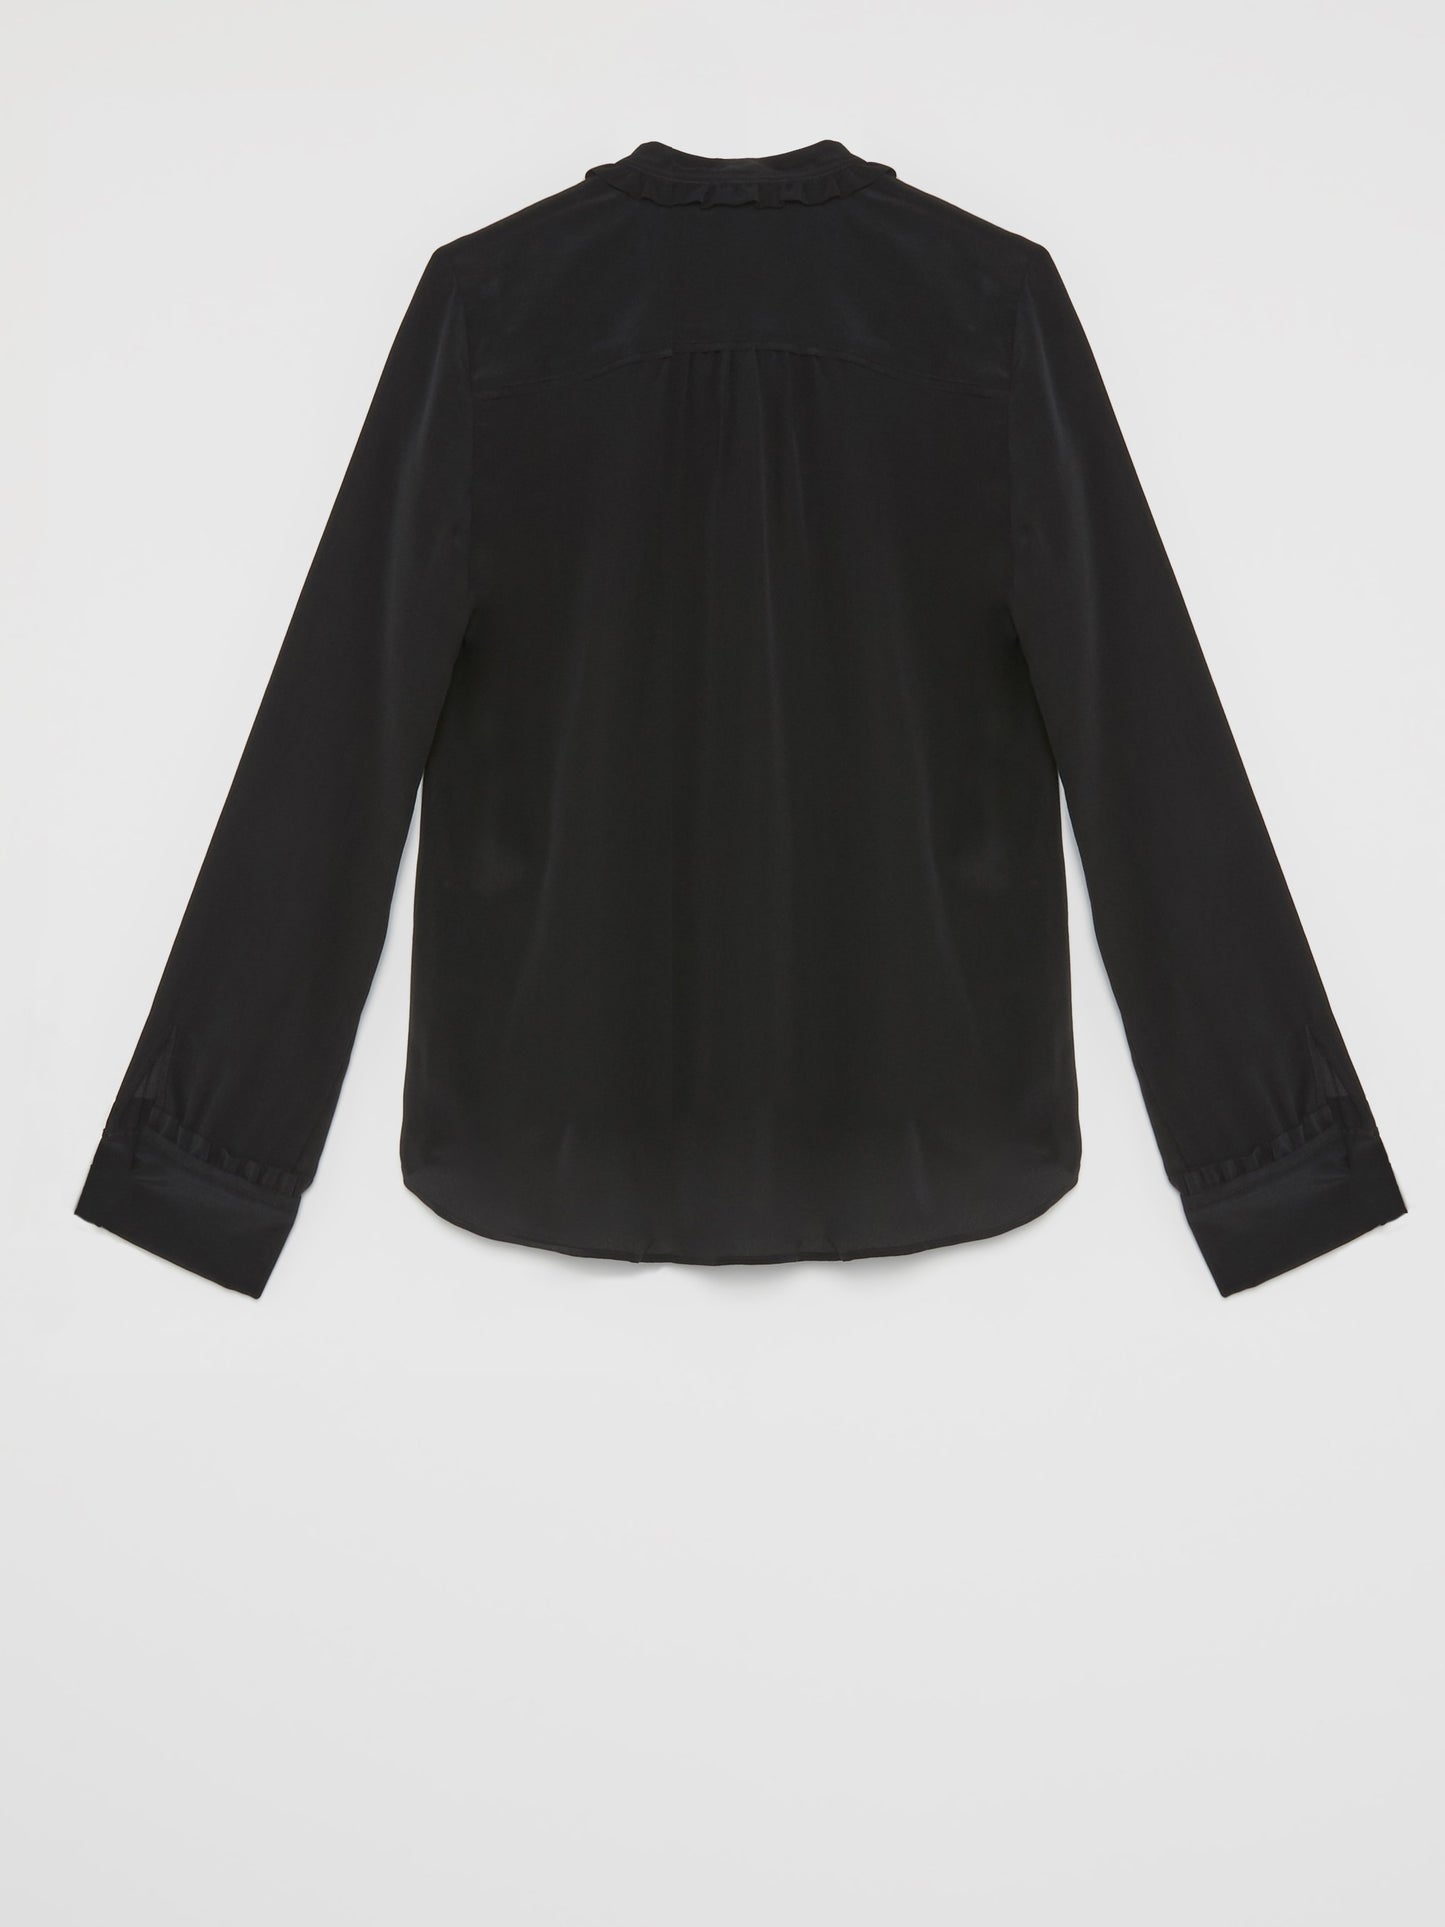 Черная блузка с рюшами на воротнике